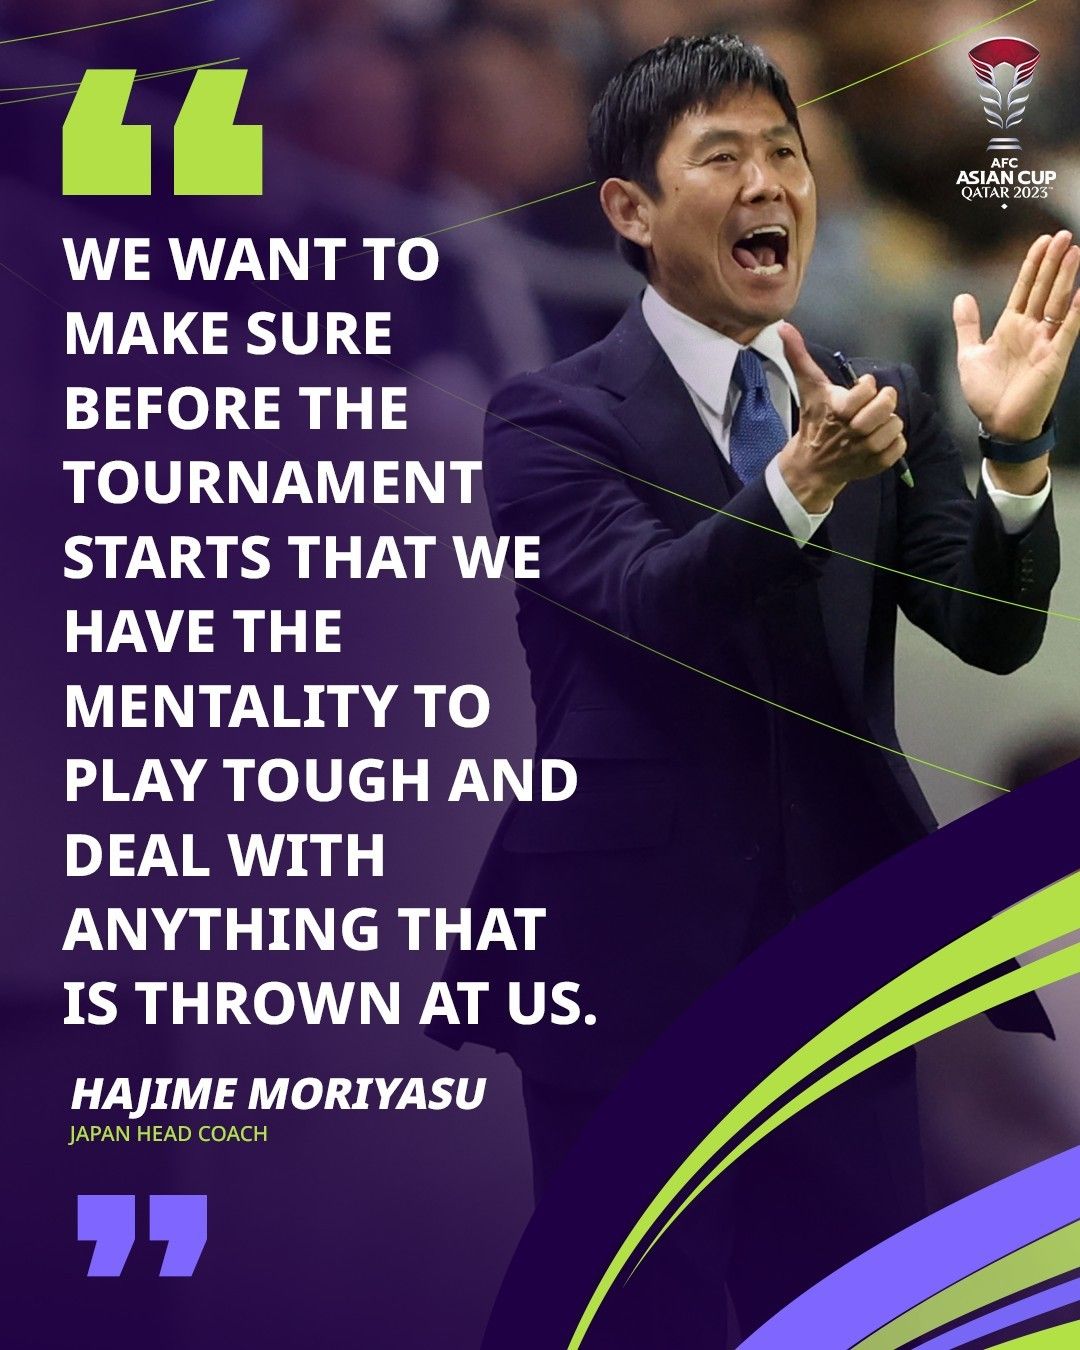 Hajime Moriyasu Pelatih Jepang di Piala Asia Qatar 2023